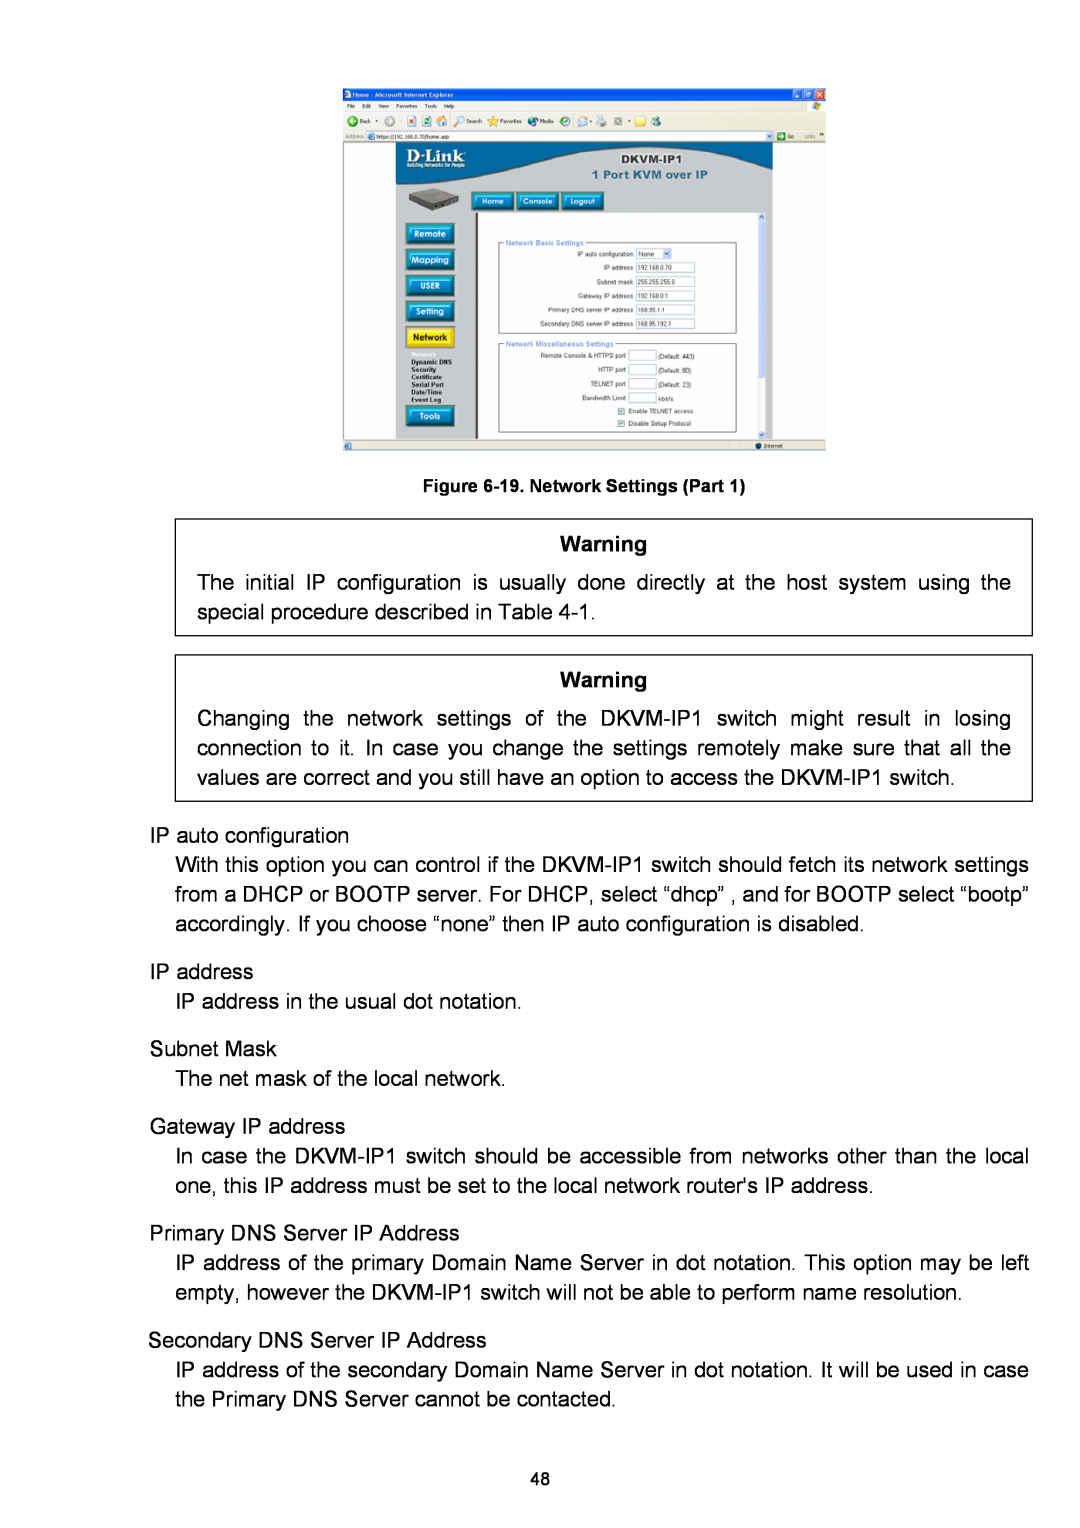 D-Link DKVM-IP1 manual 19. Network Settings Part 